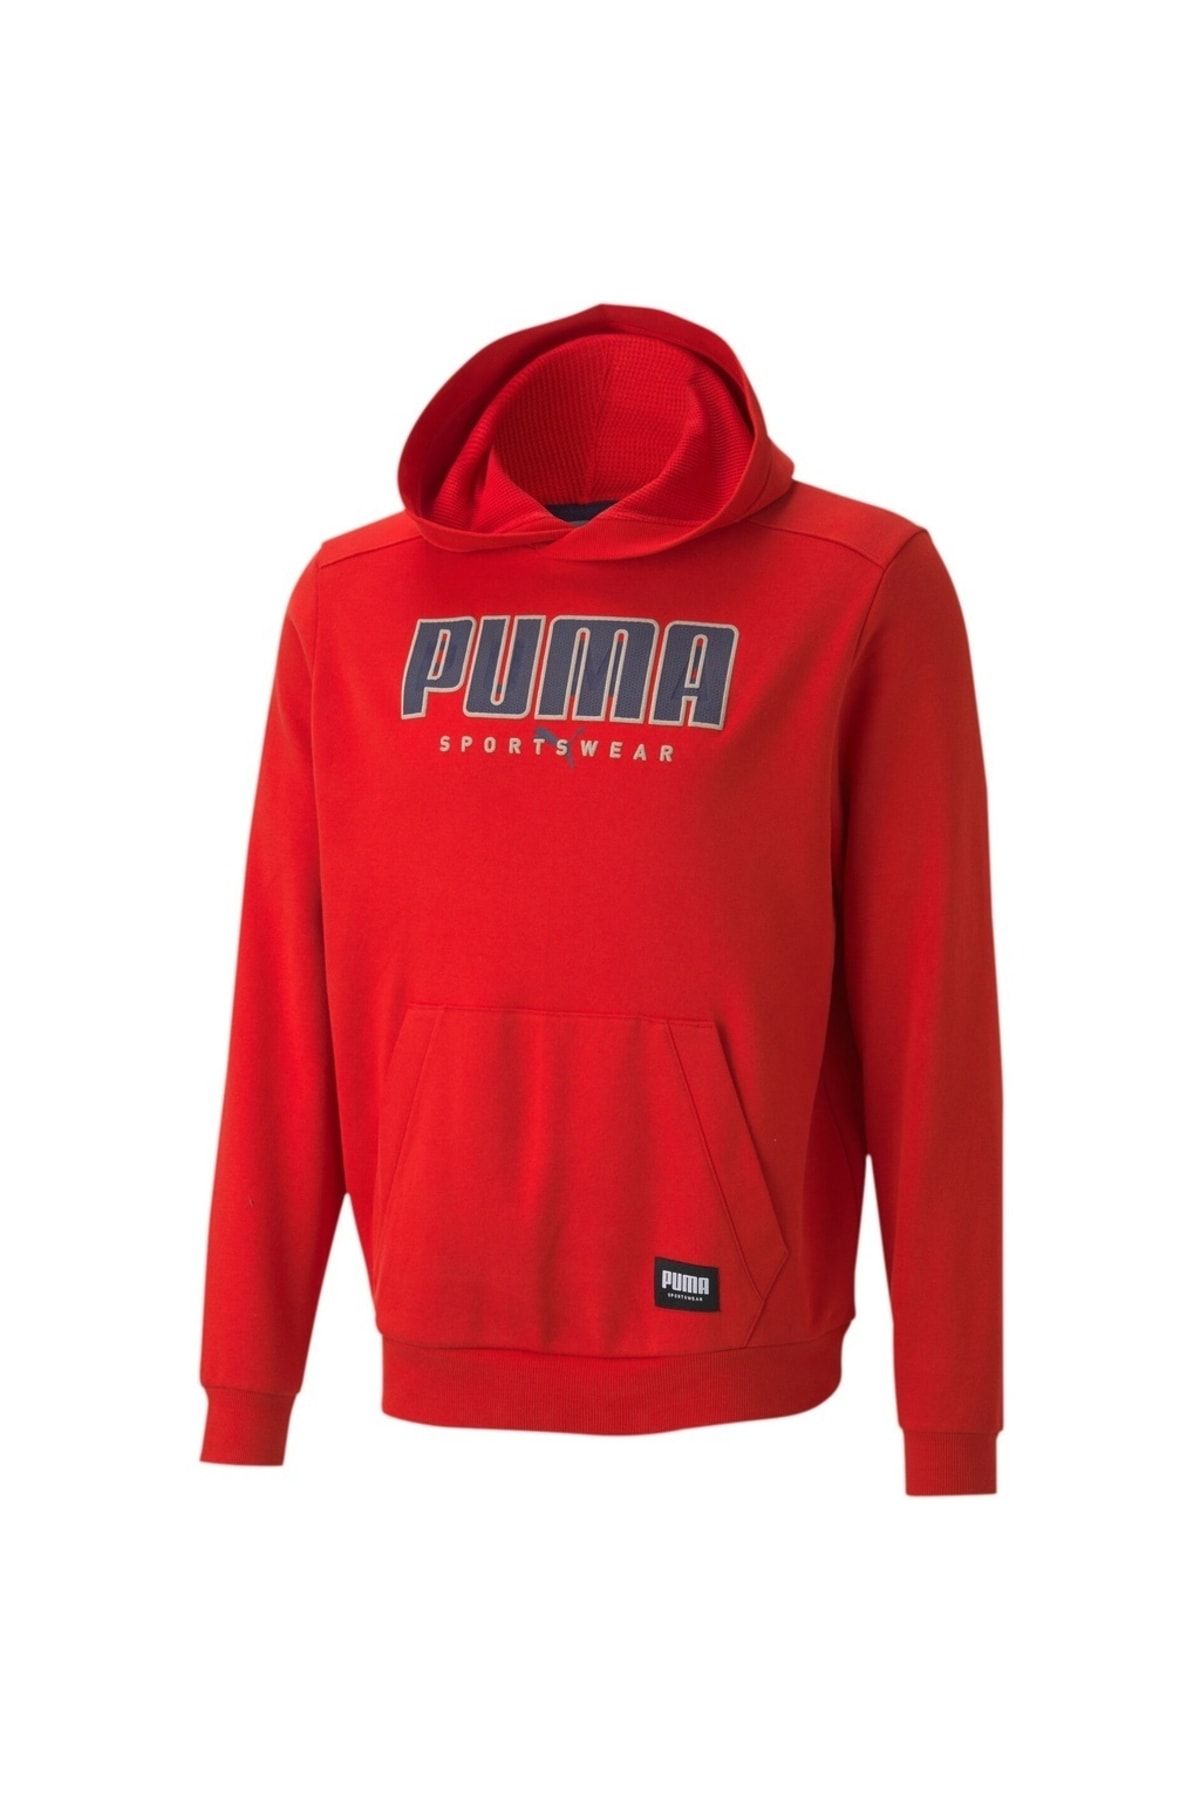 Puma Erkek Hoodie Athletics Erkek Sweatshirt 58345611 Kırmızı